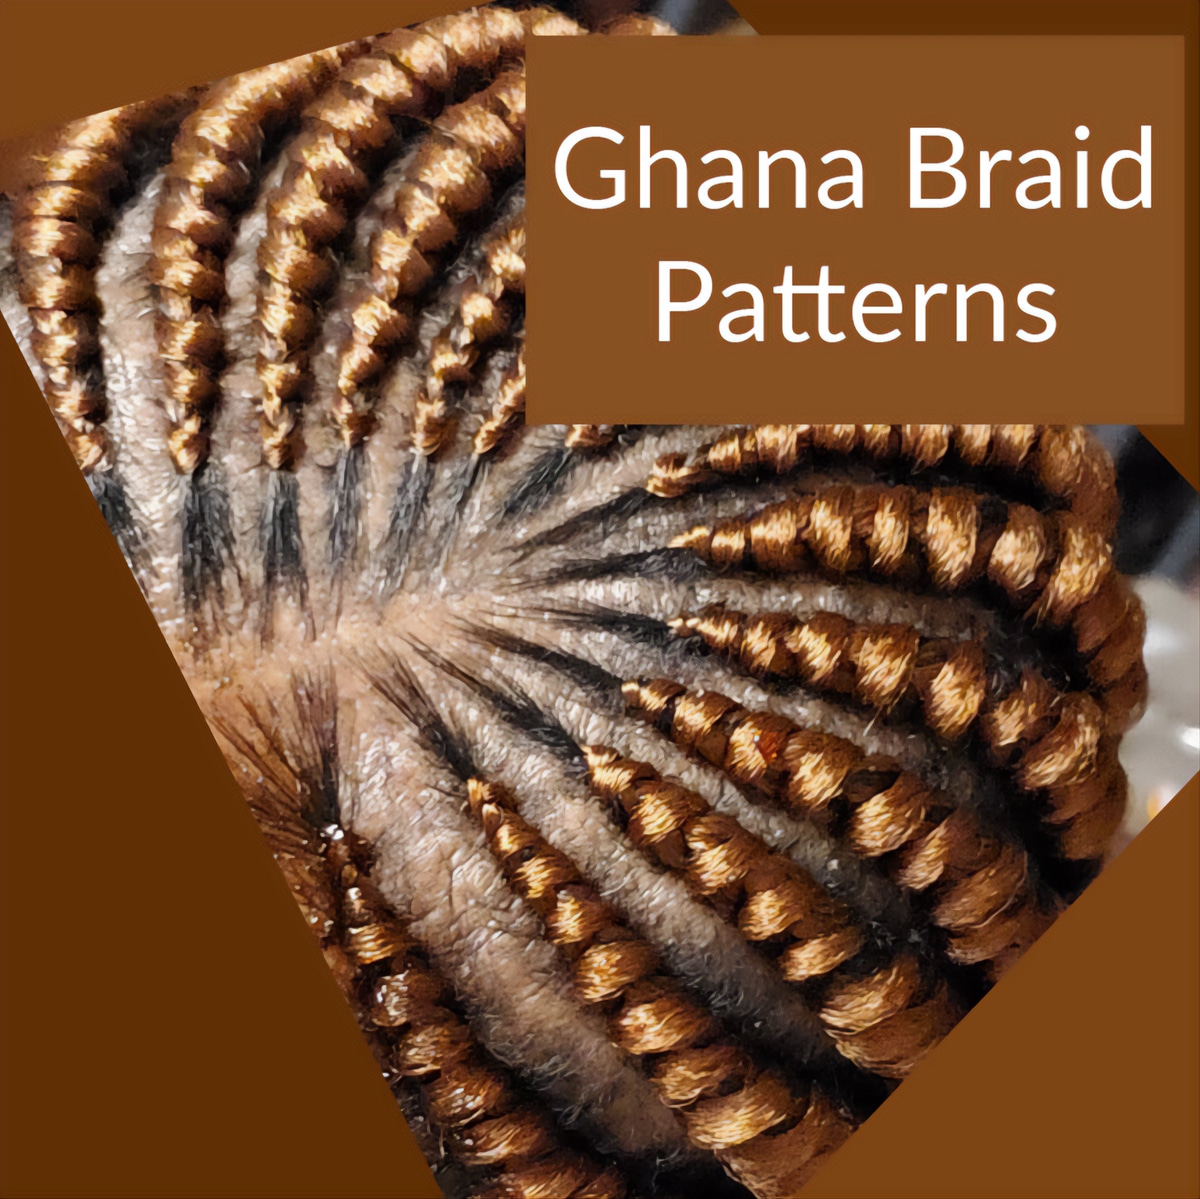 Ghana braid pattern for easily creating and ghana knotless braid updo for black women.